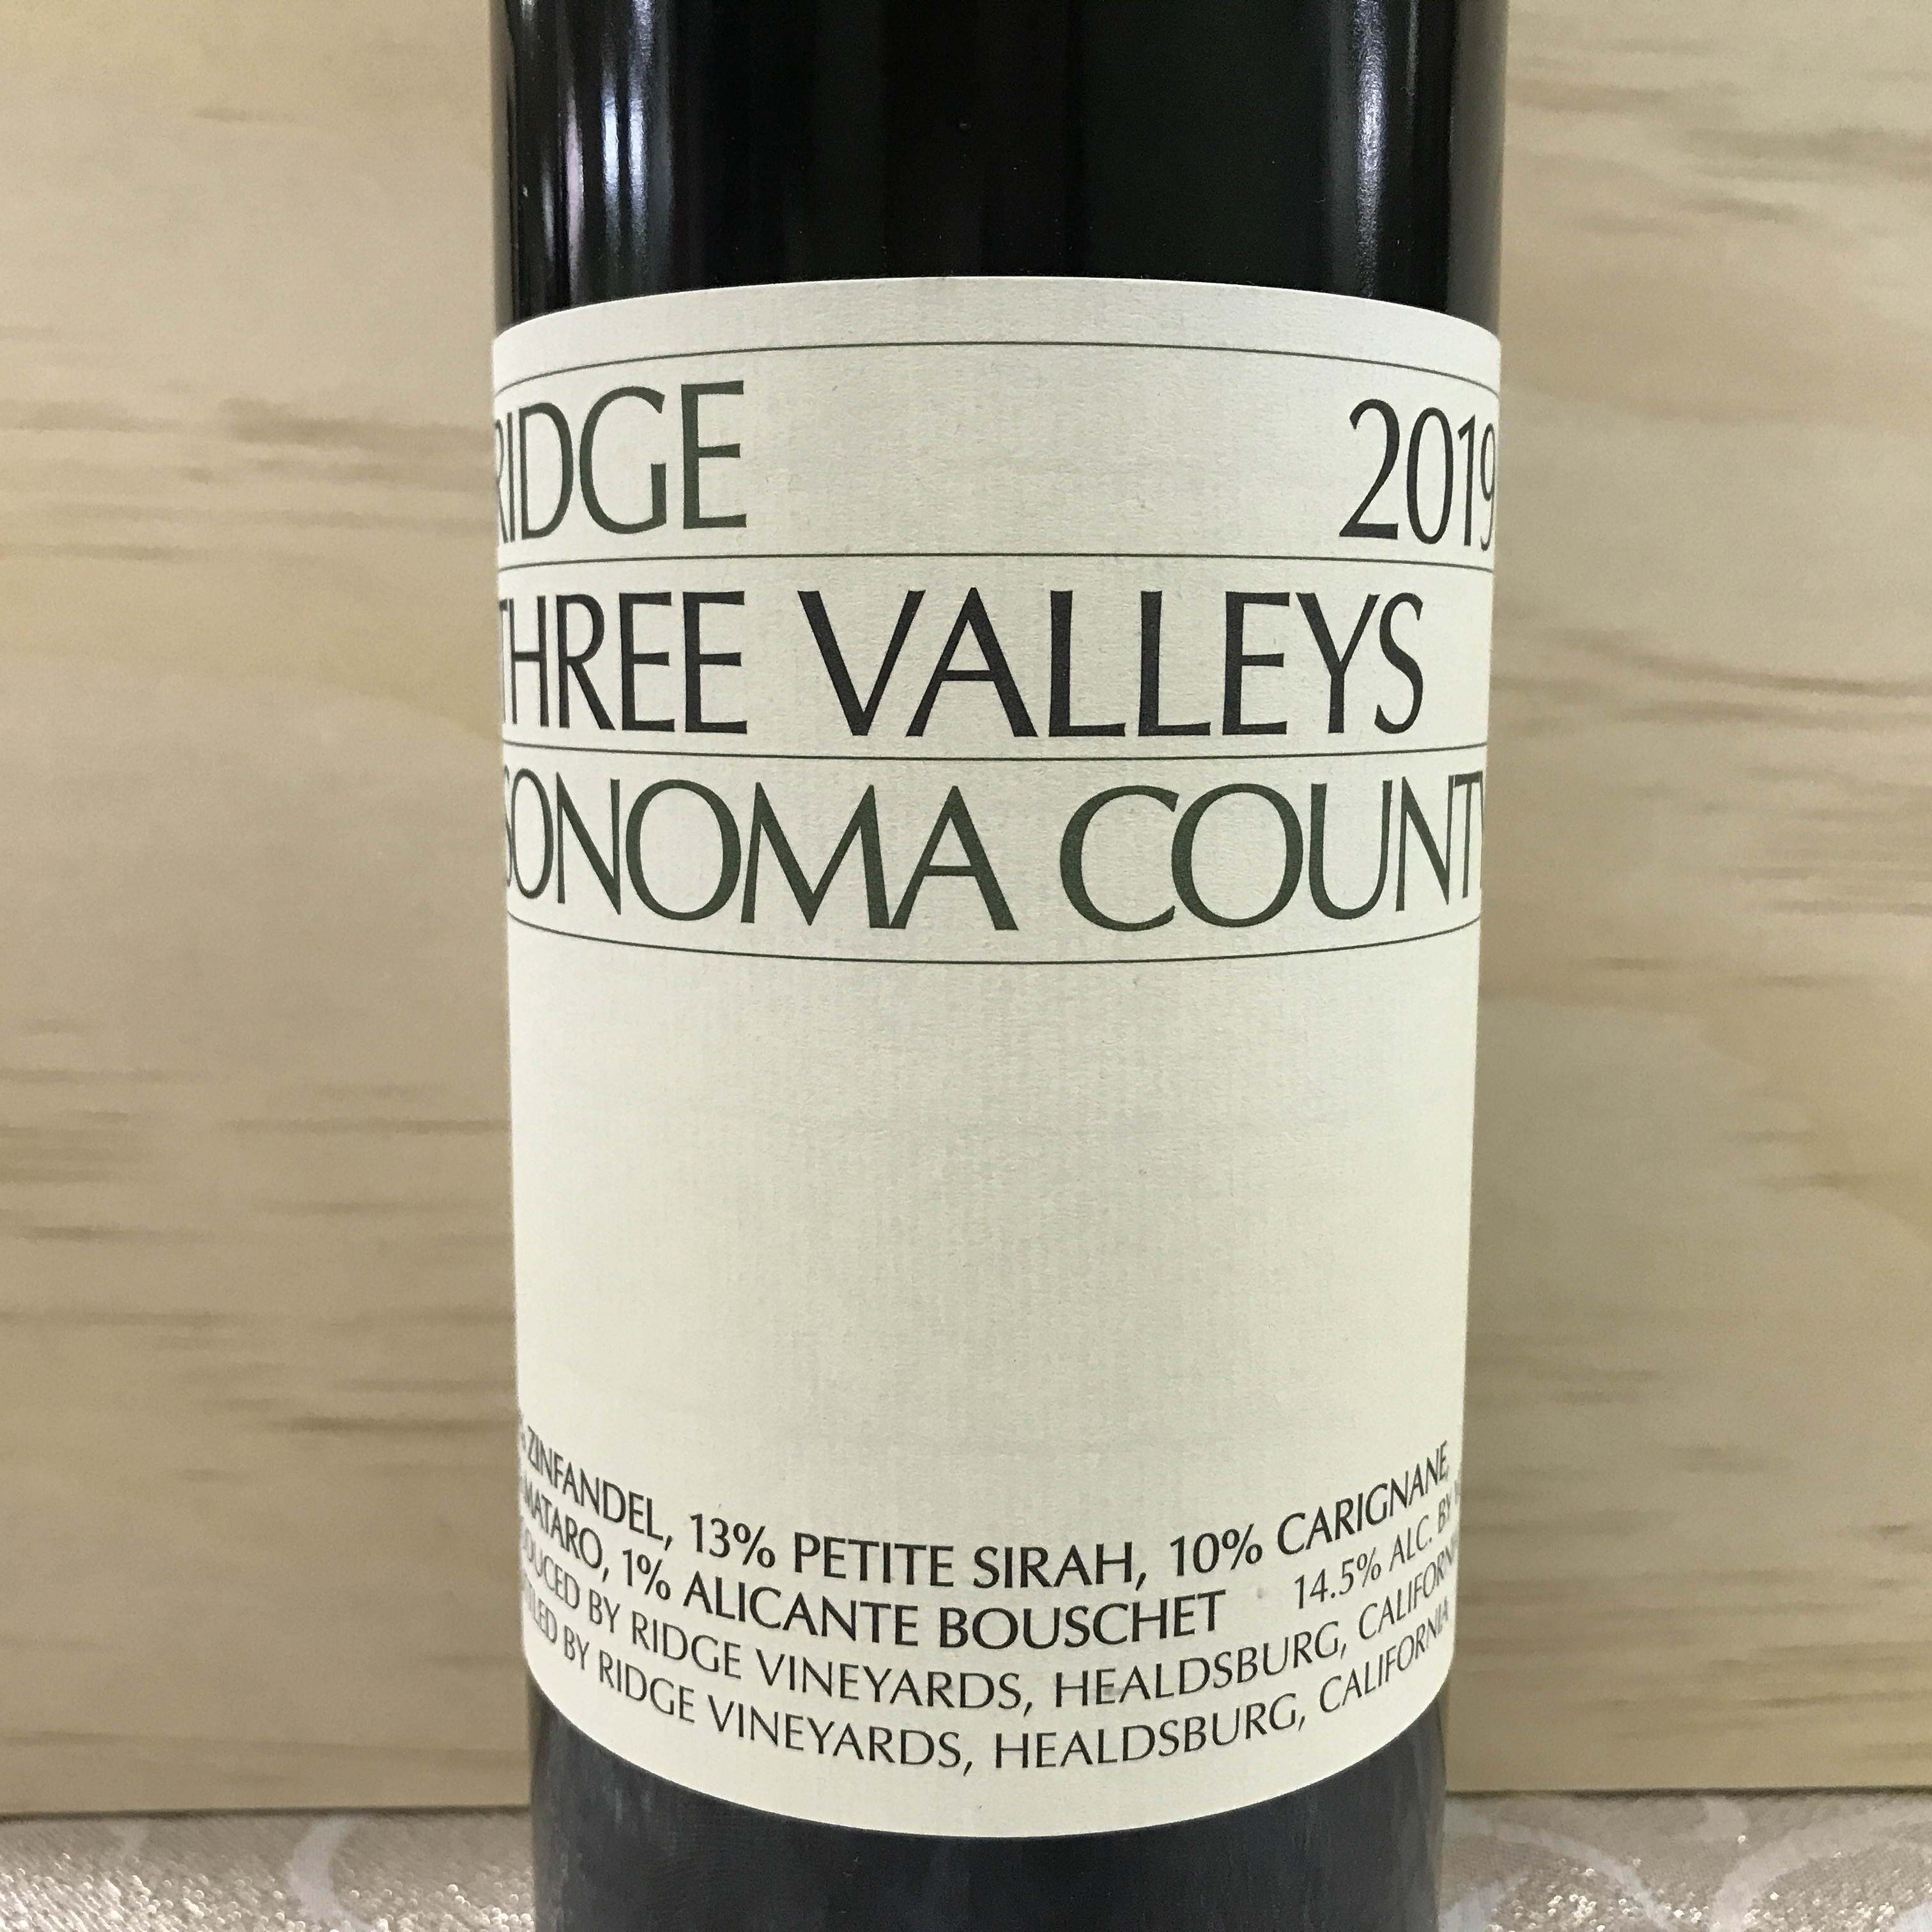 Ridge Three Valleys Sonoma County red blend 2019